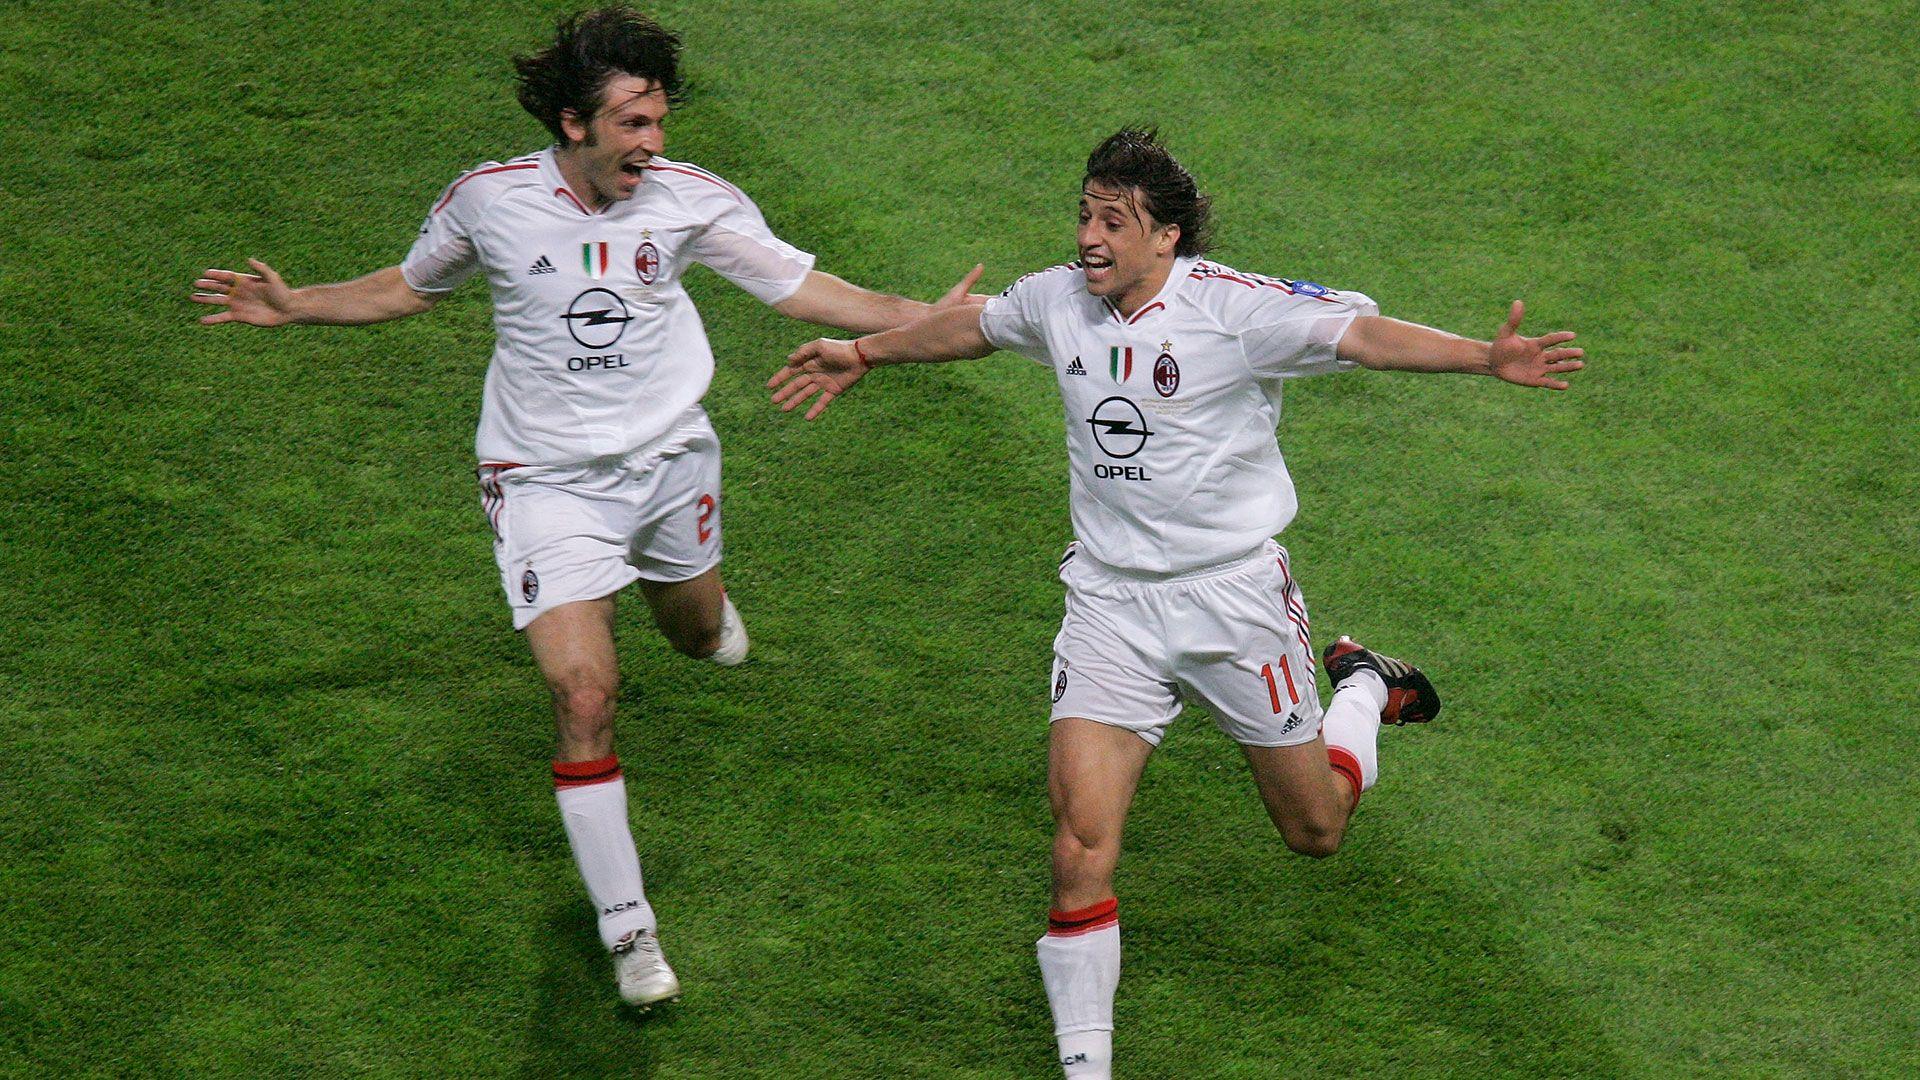 Hernan Crespo Andrea Pirlo AC Milan Liverpool Champions League 2005